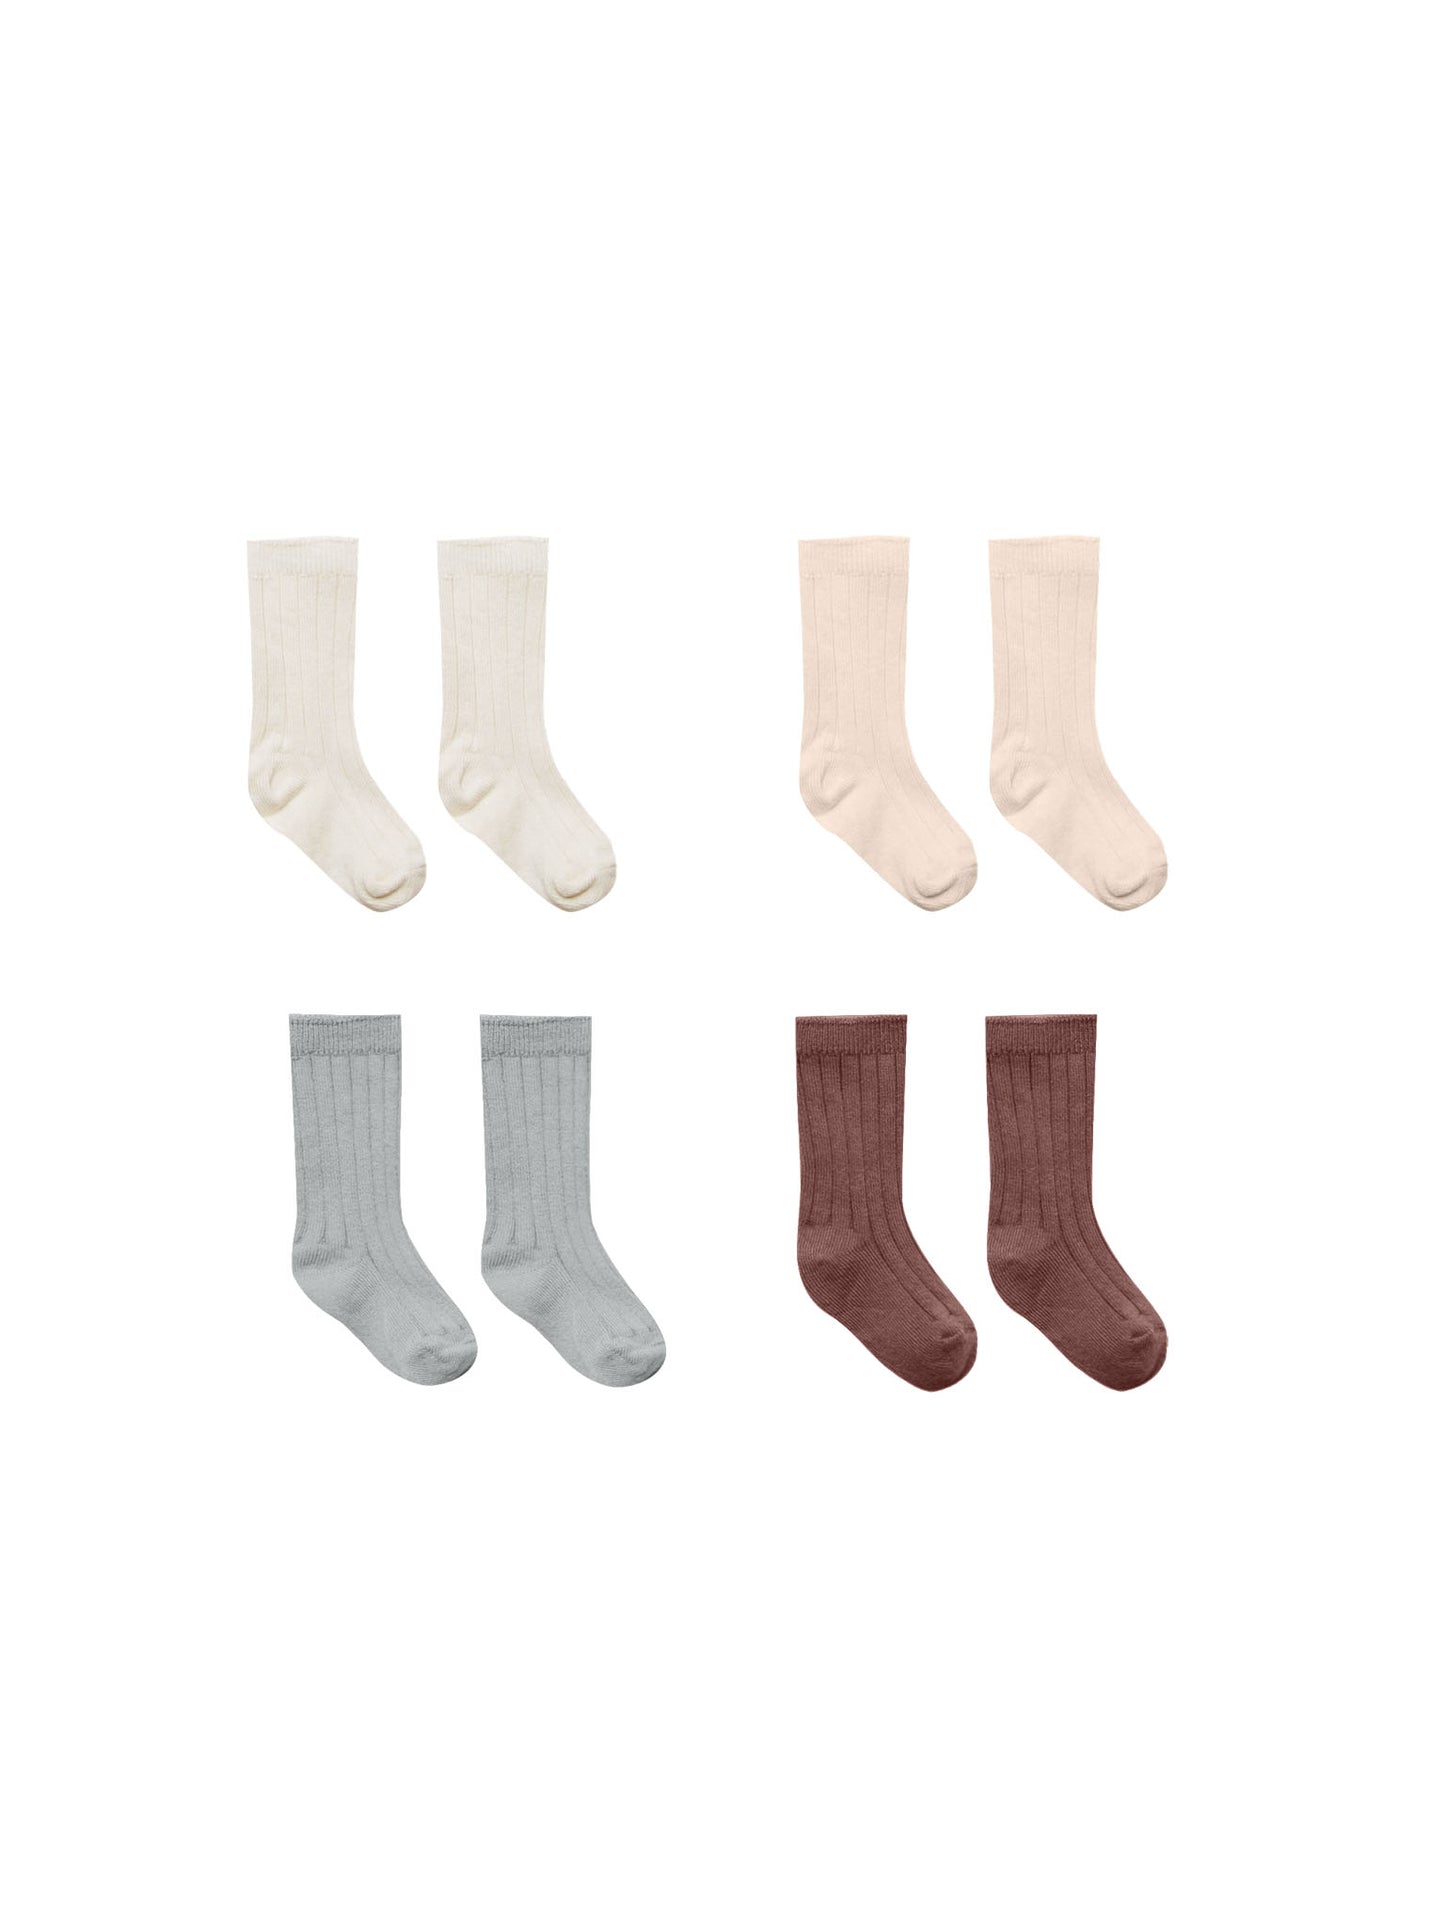 Socks, Set of 4 Stockings | Ivory, Shell, Dusty Blue, Plum